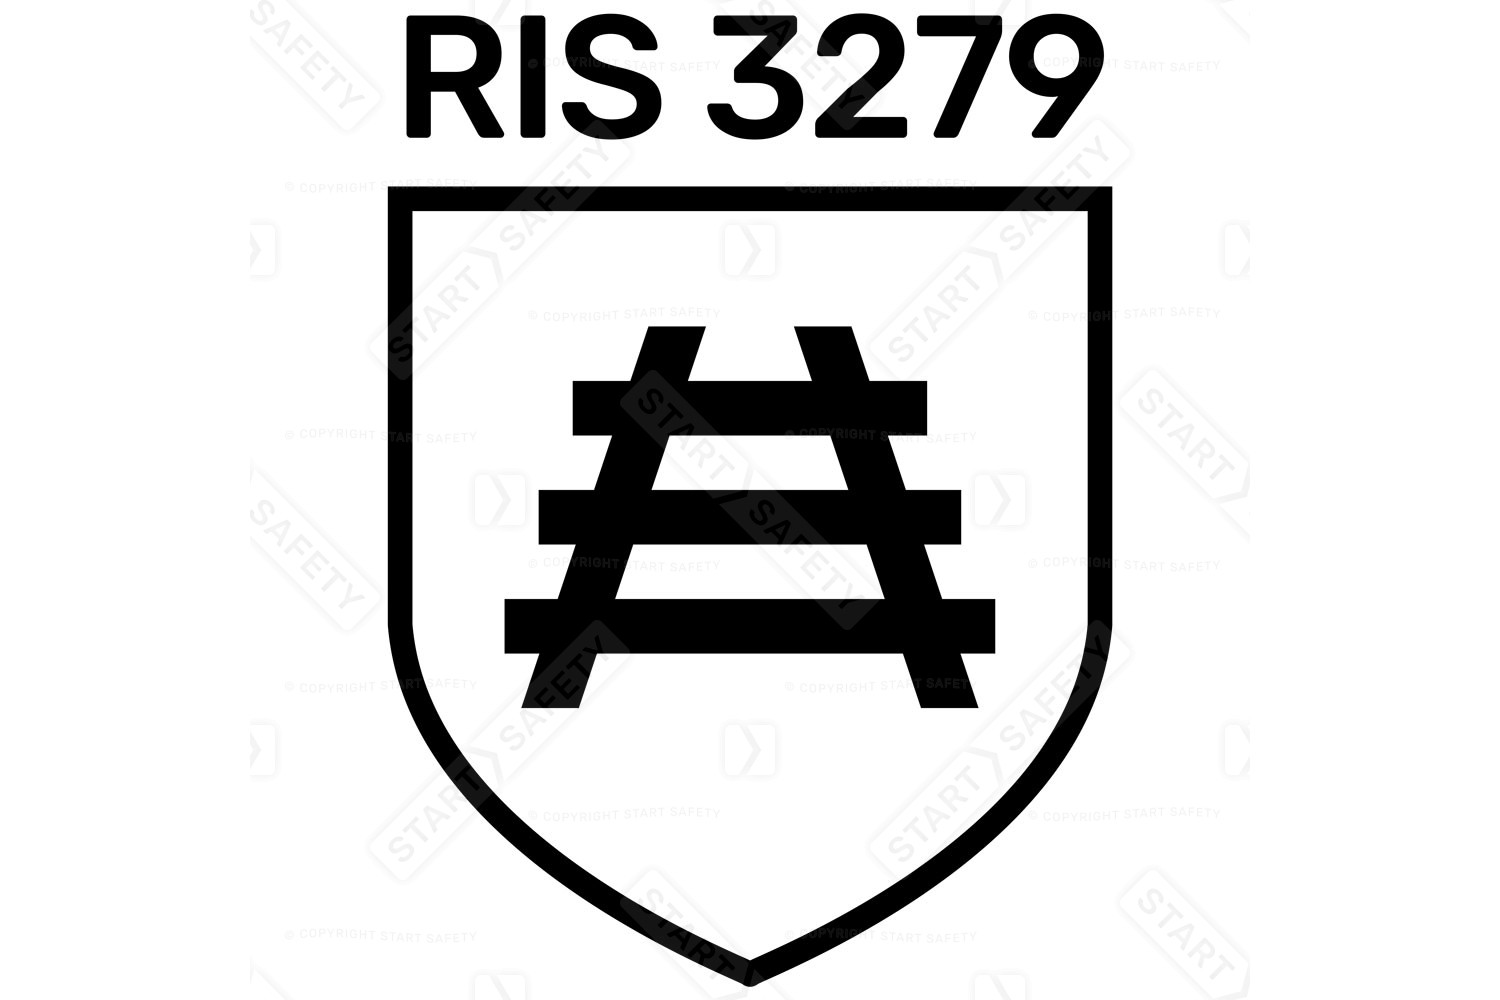 RIS-3279 Rail Compliance